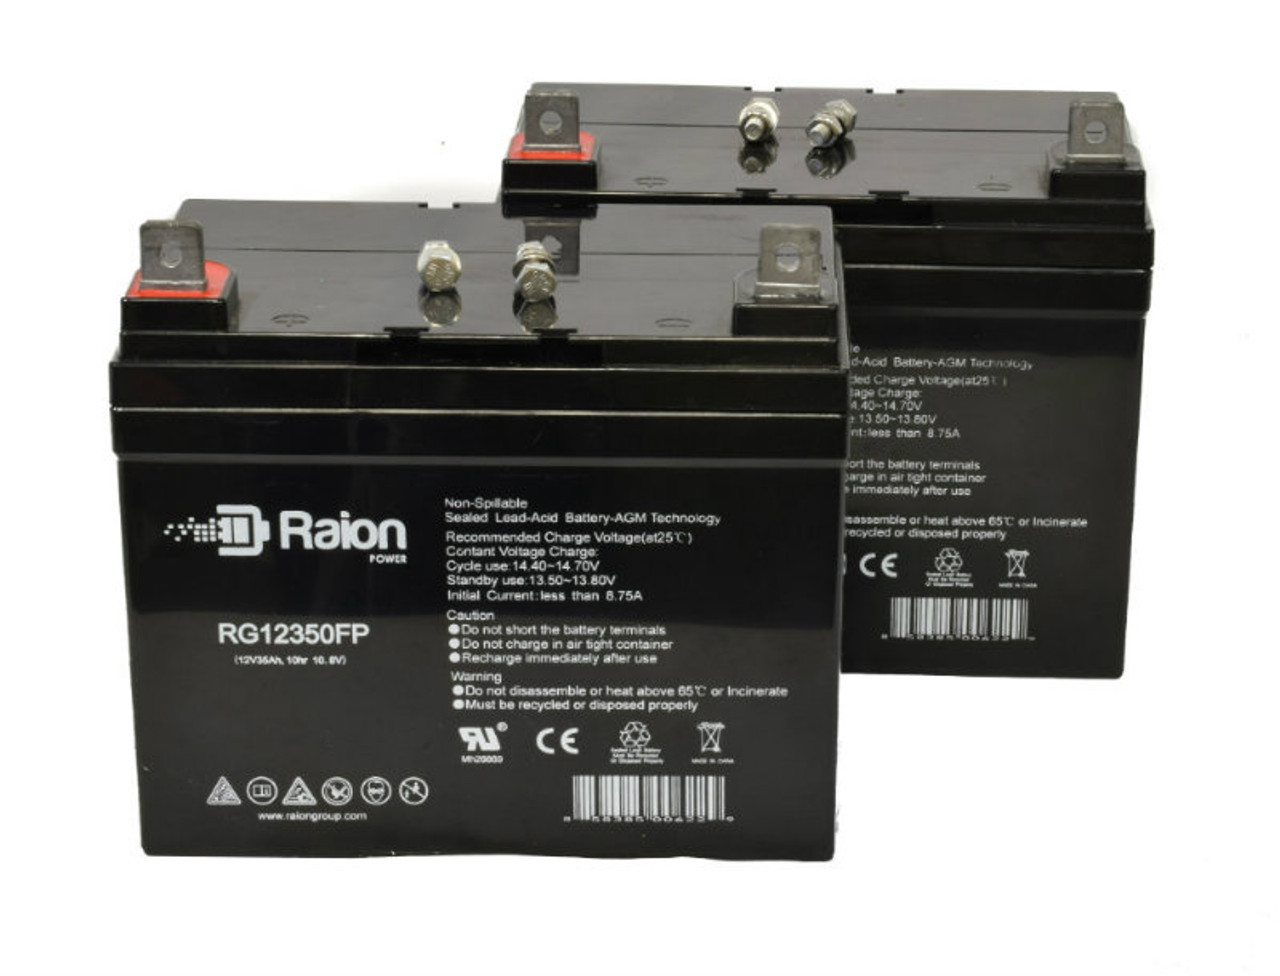 Raion Power Replacement 12V 35Ah Lawn Mower Battery for John Deere GX95 - 2 Pack